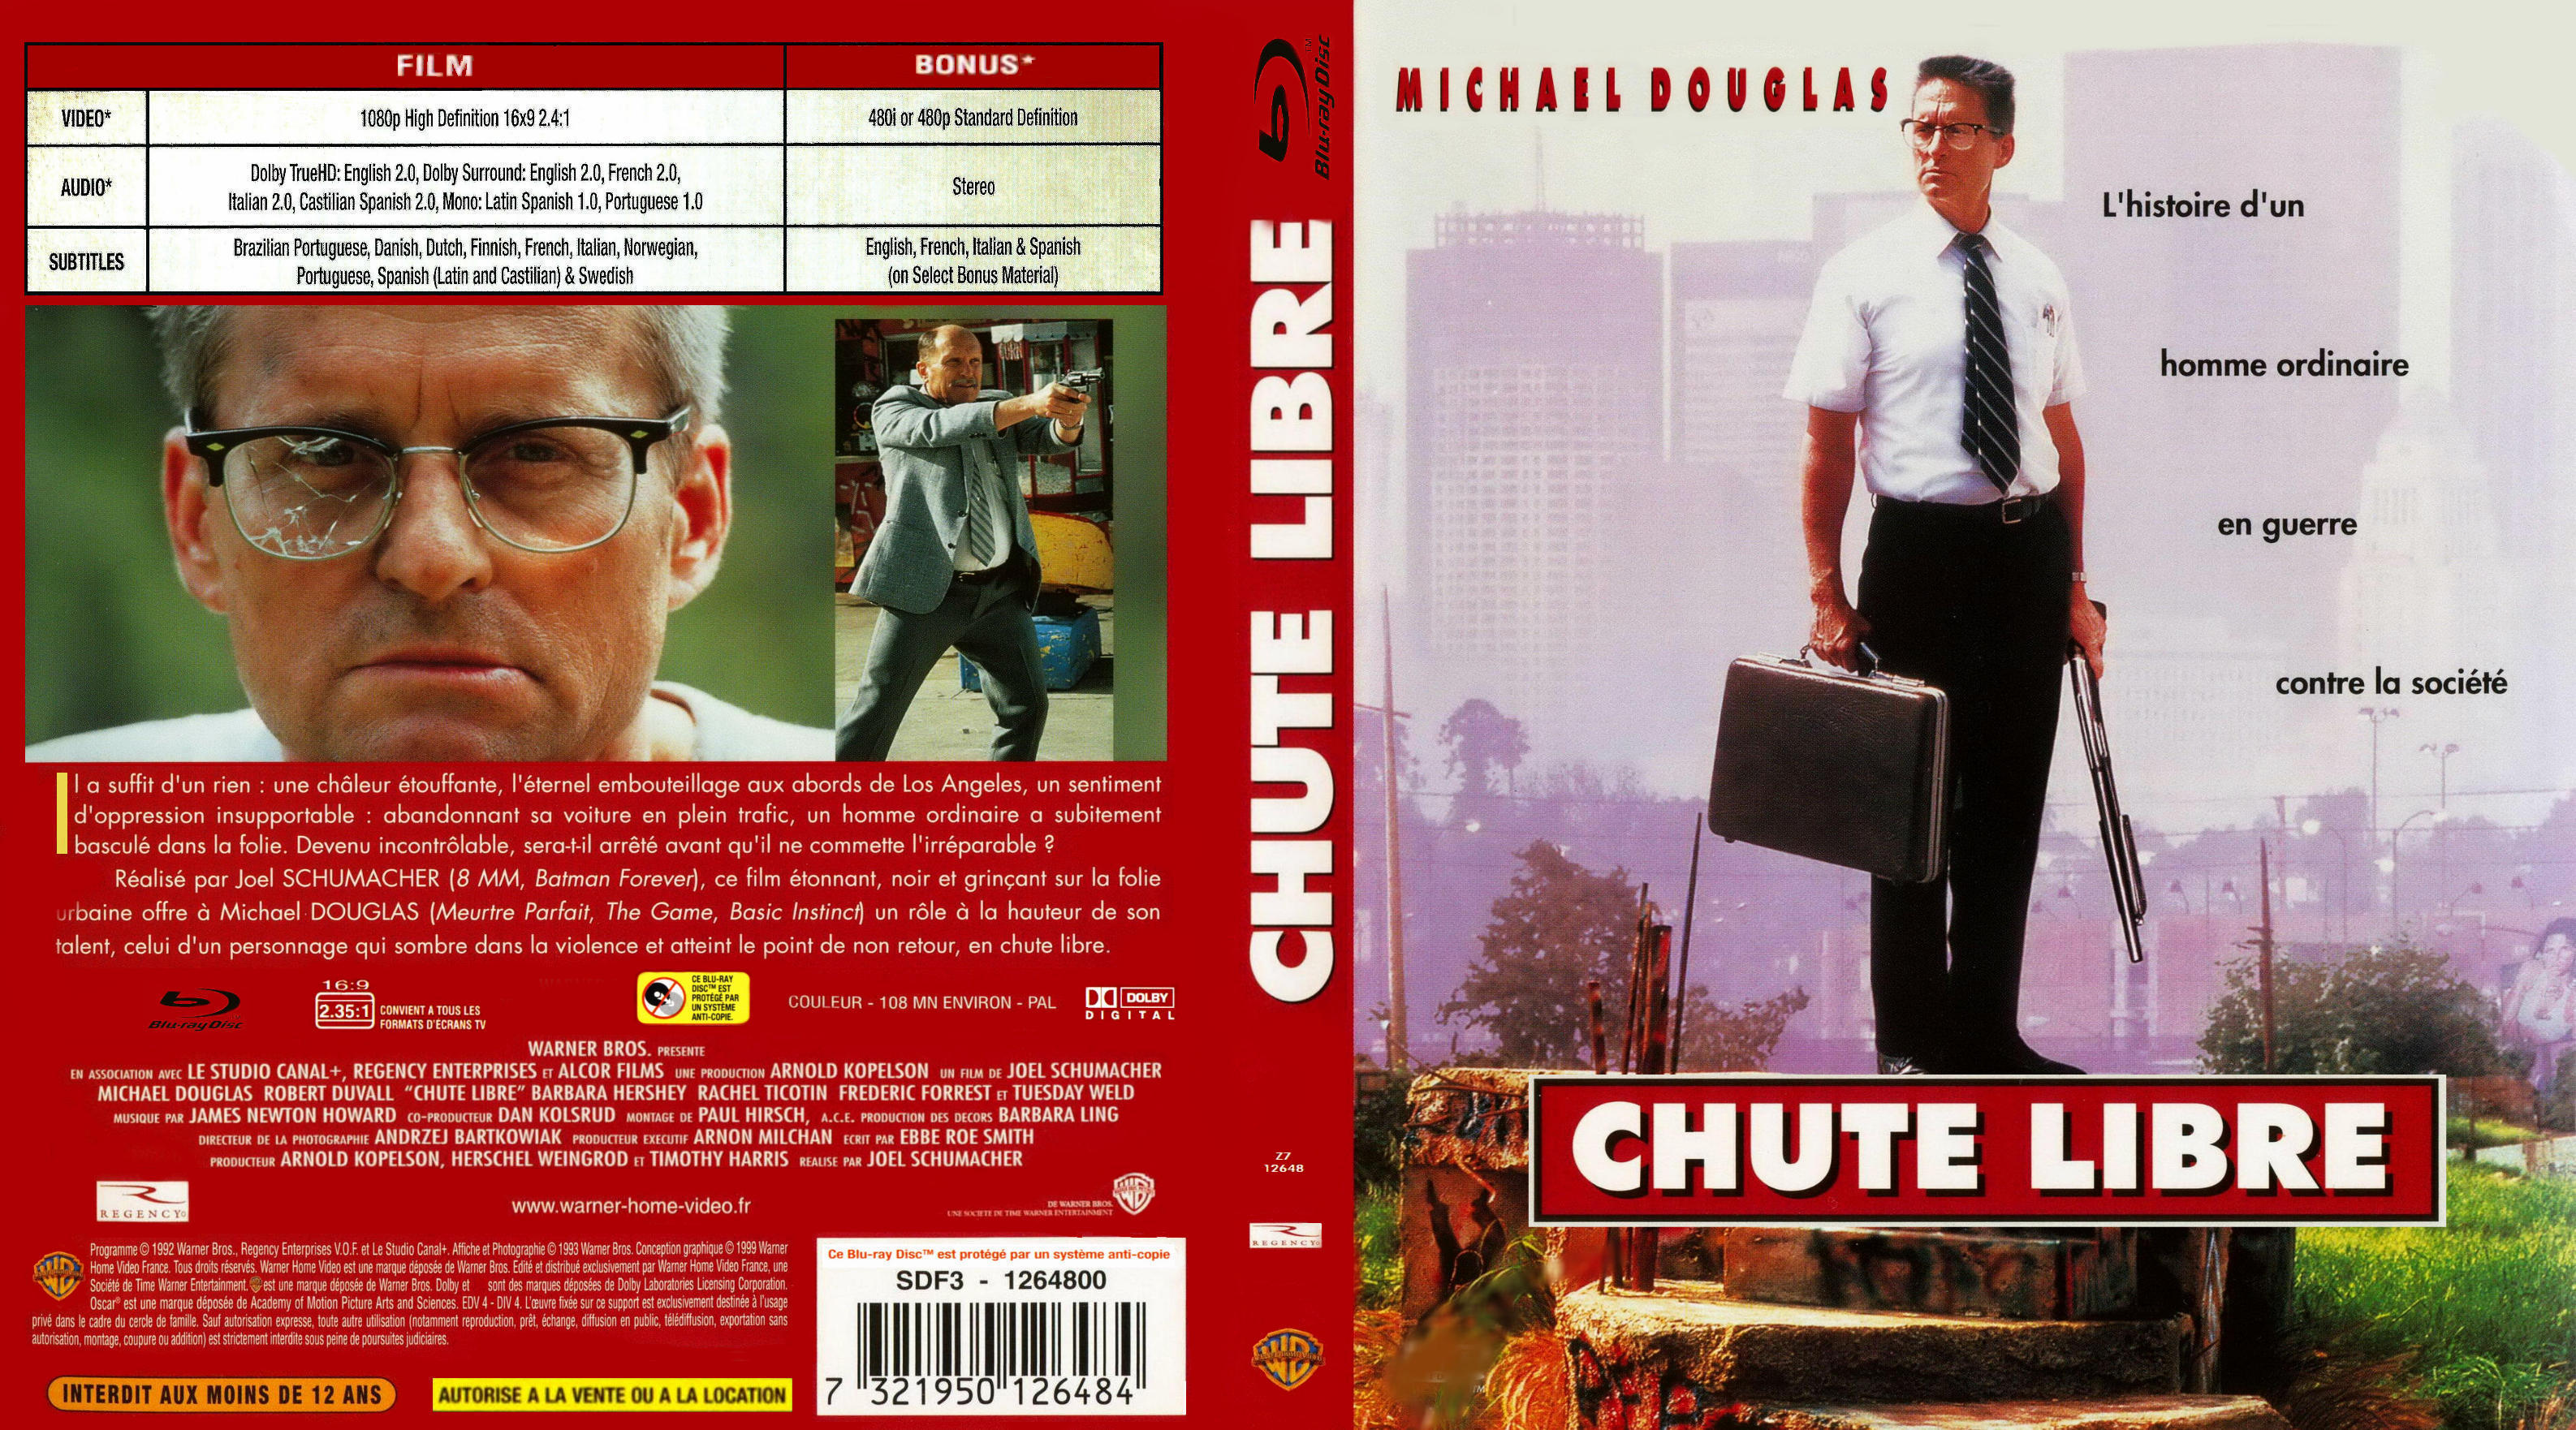 Jaquette DVD de Chute libre custom (BLU-RAY) - Cinéma Passion